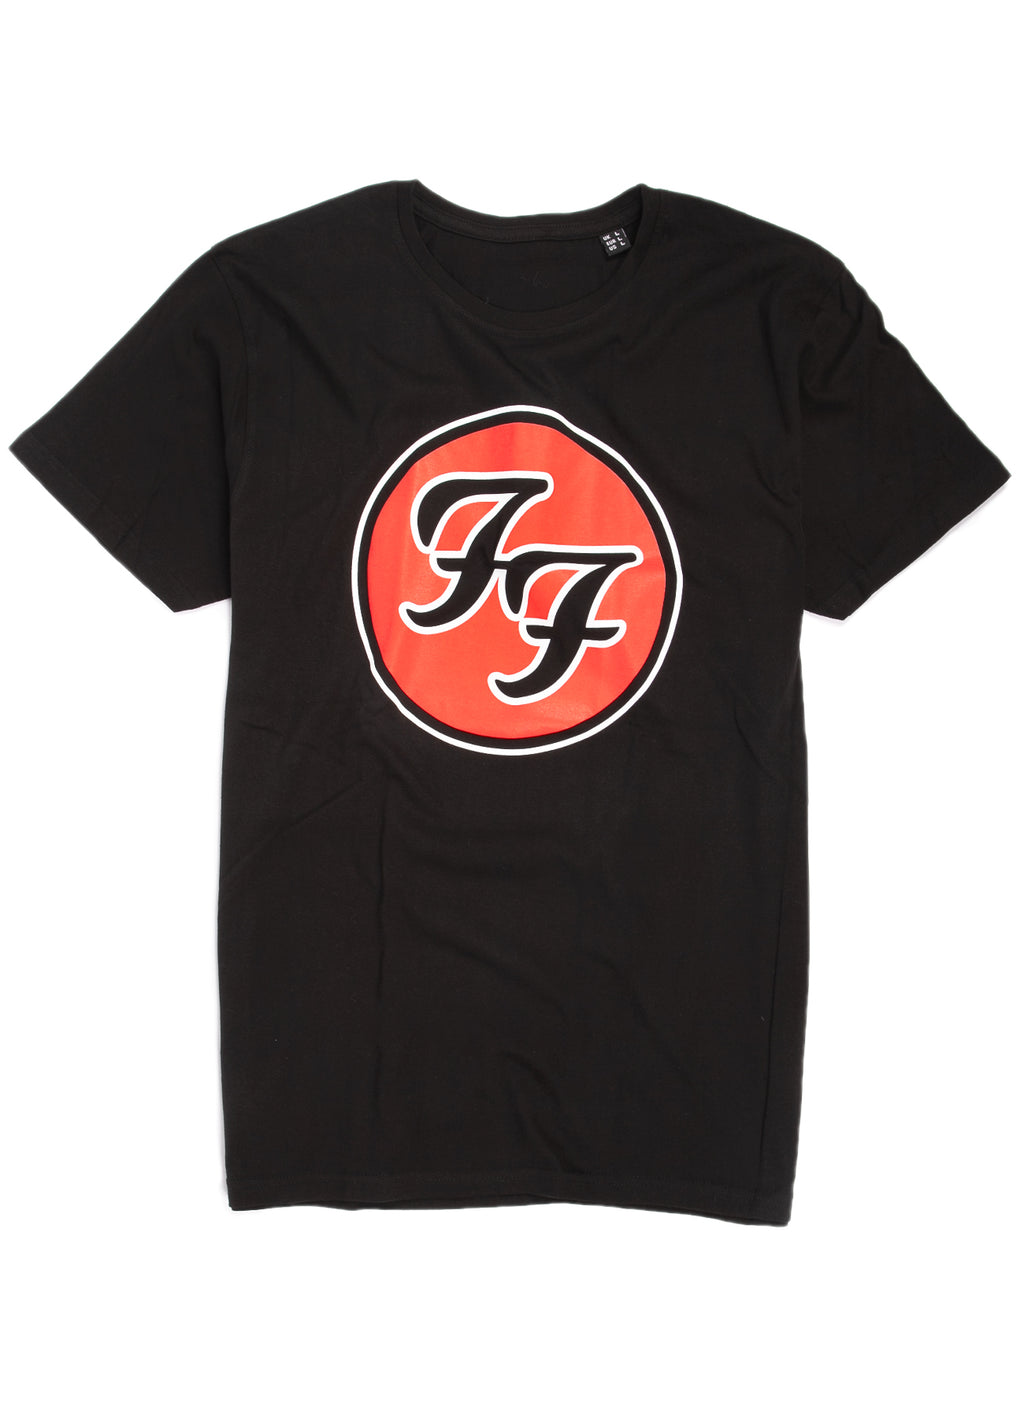 Foo Fighters original logo graphic t-shirt.